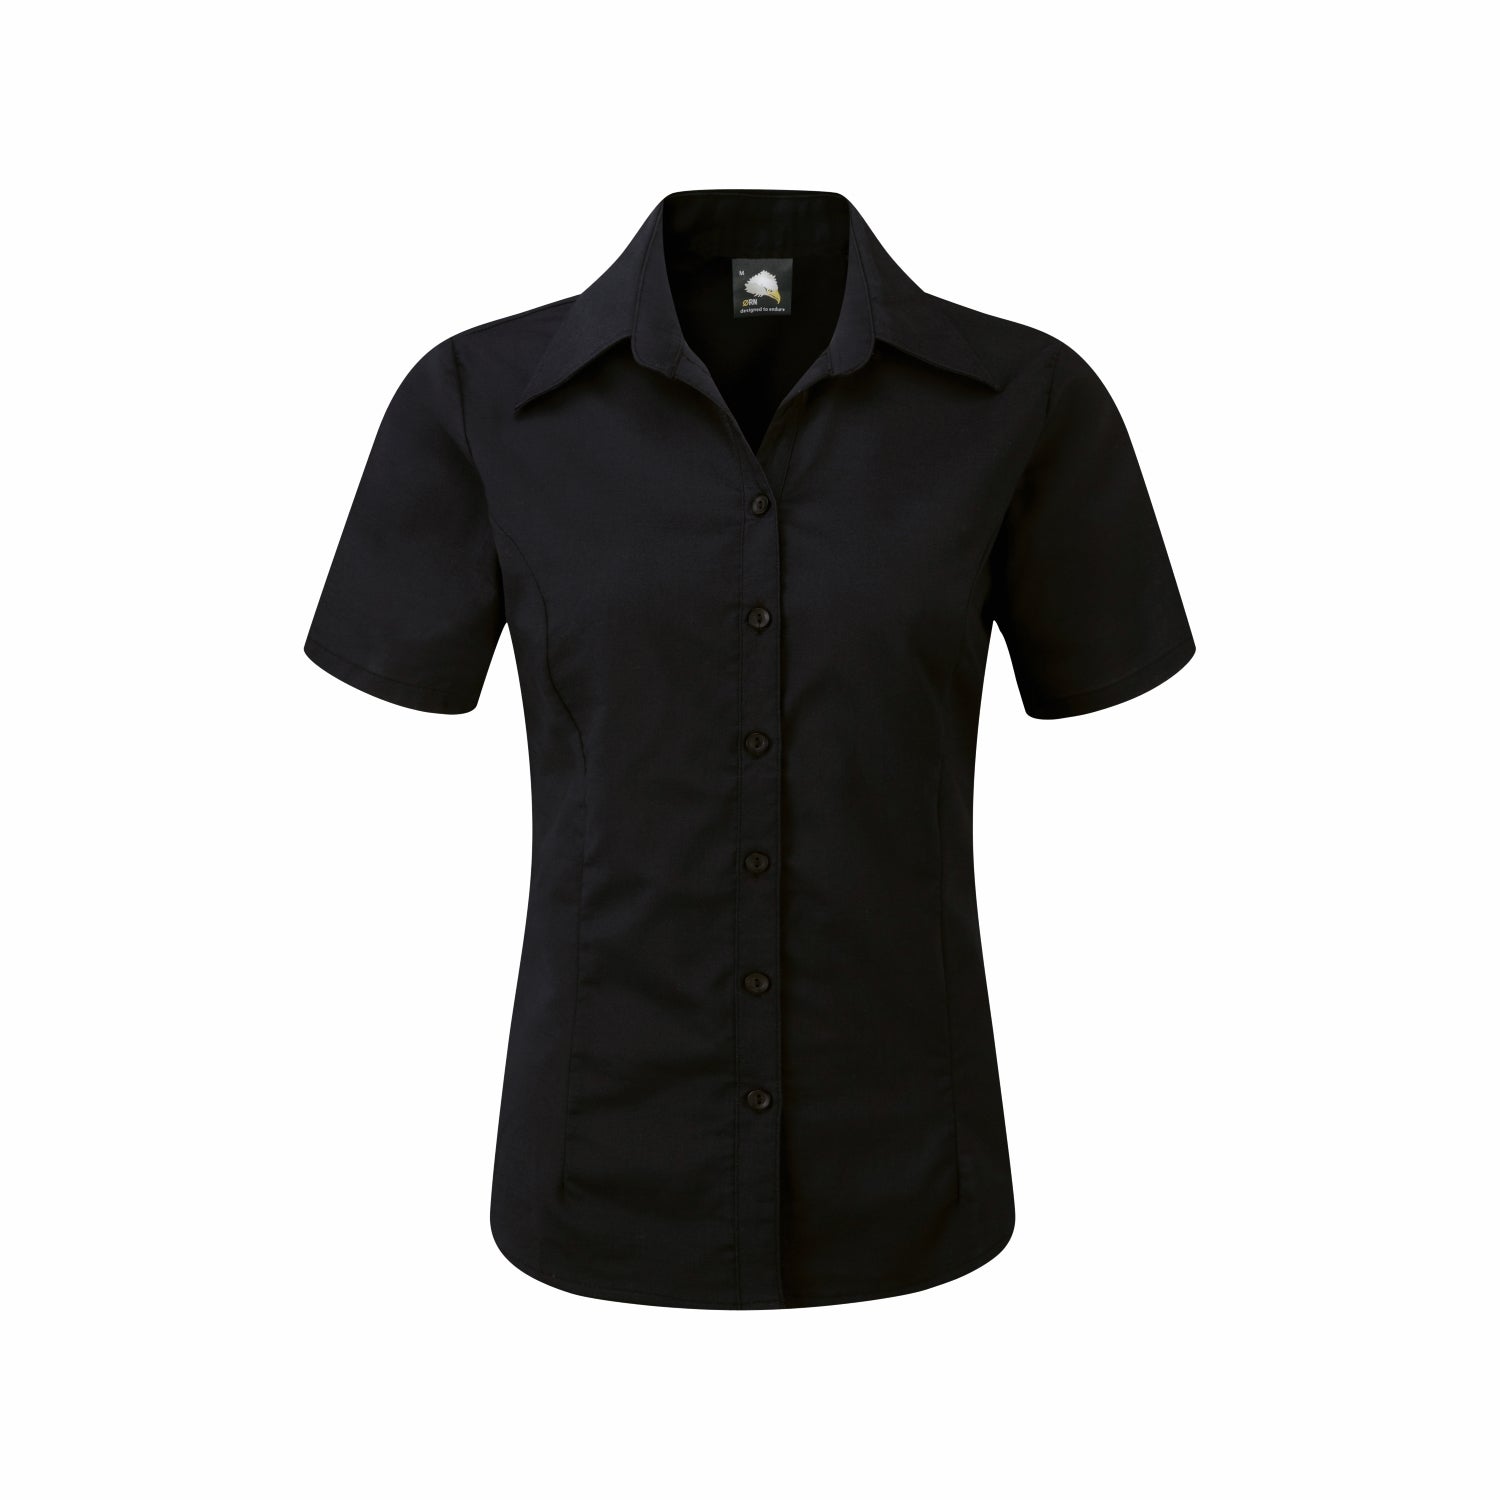 Orn Classic Ladies Shirt - Black - Size 20